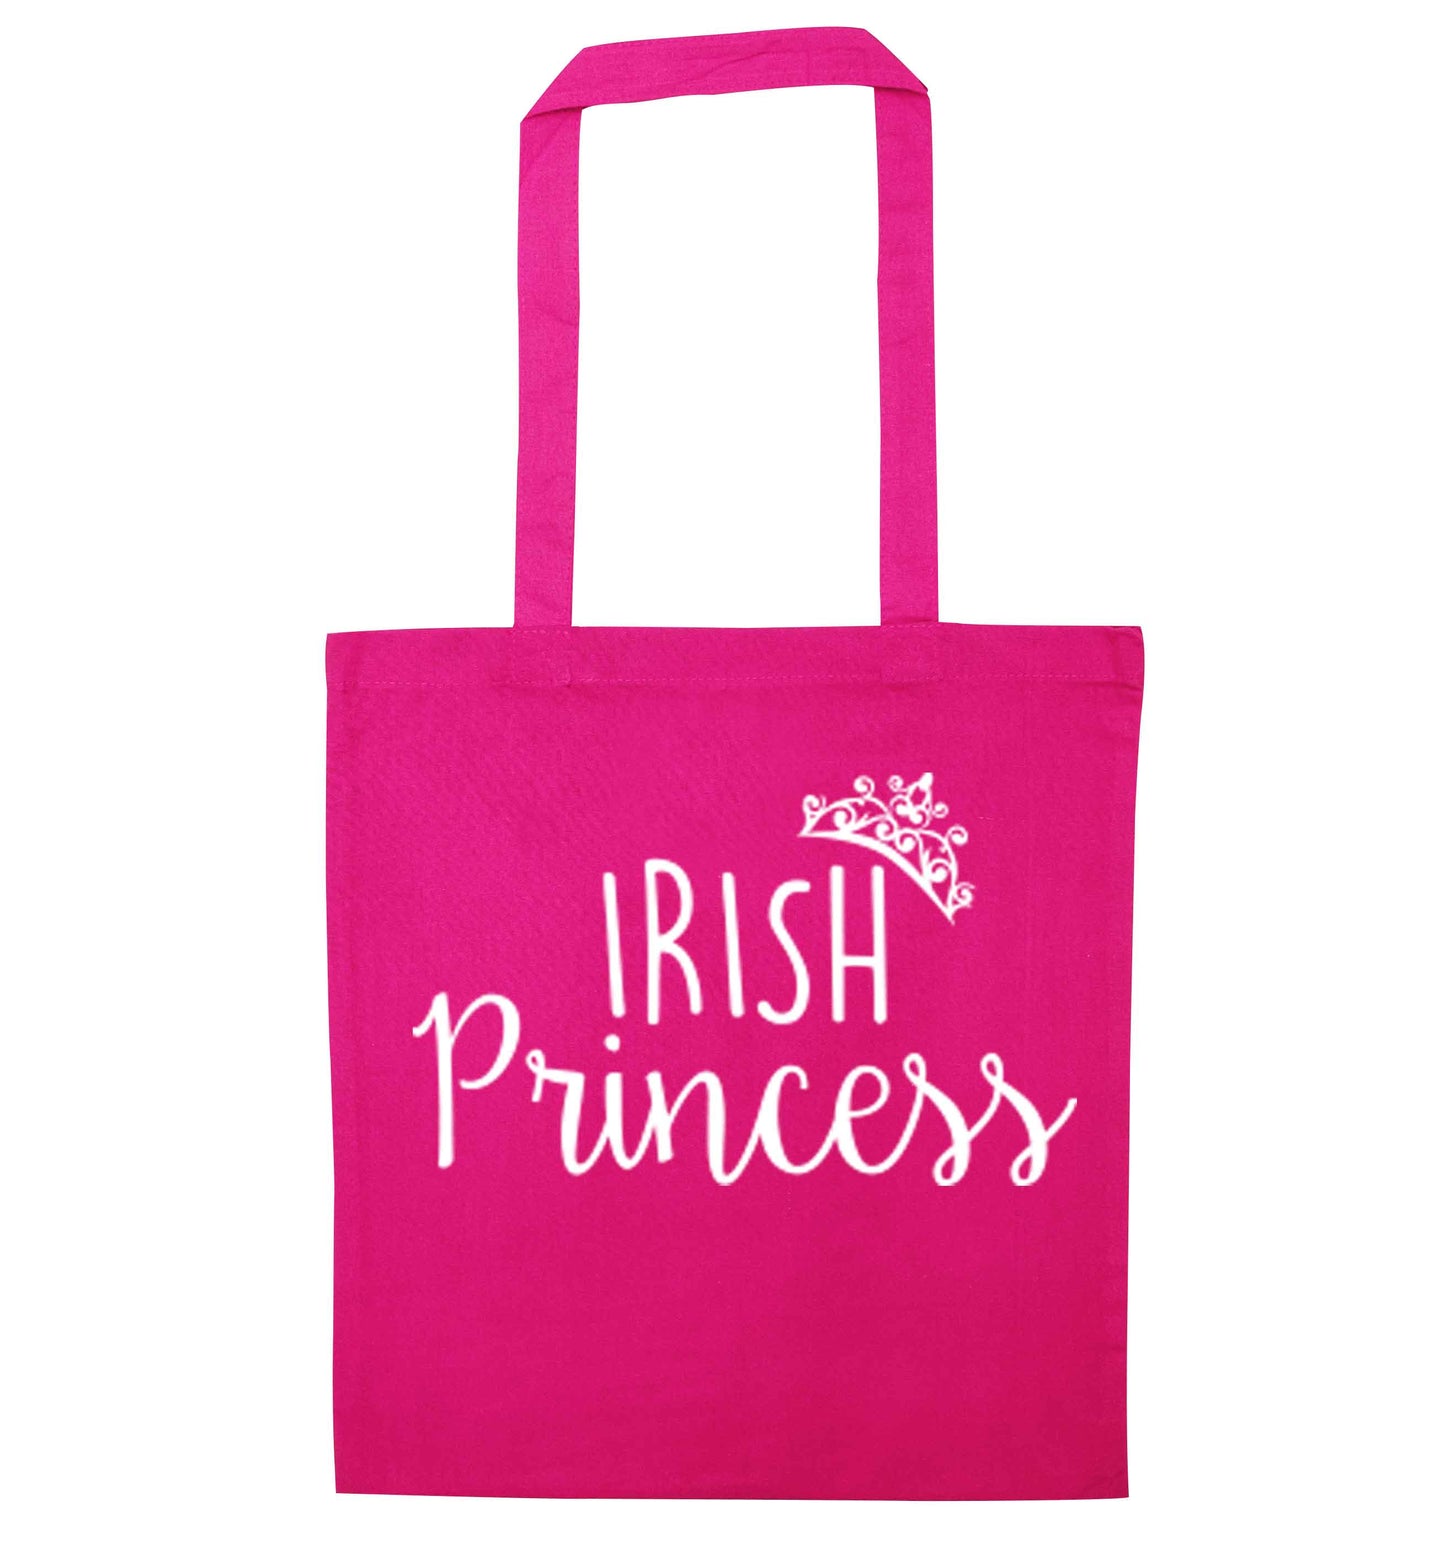 Irish princess pink tote bag